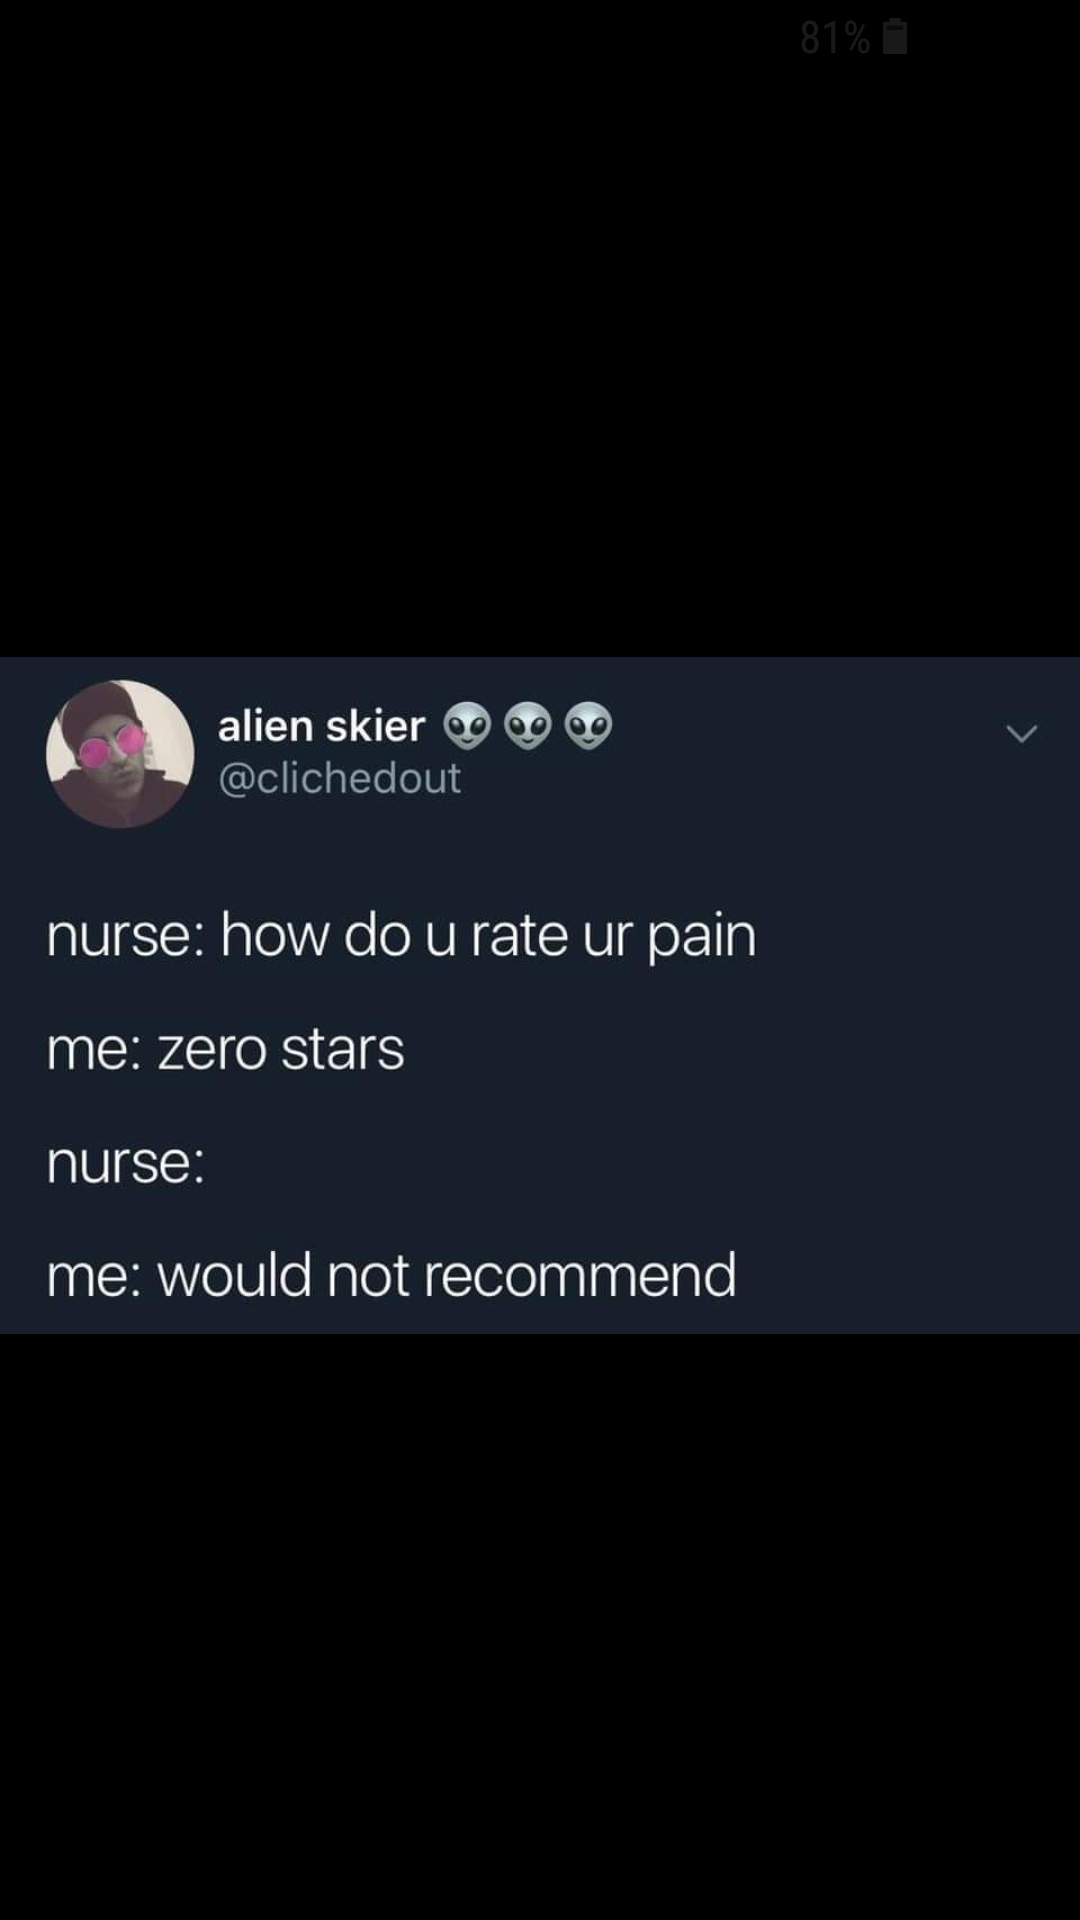 screenshot - 81% alien skier 0 0 0 nurse how do u rate ur pain me zero stars nurse me would not recommend